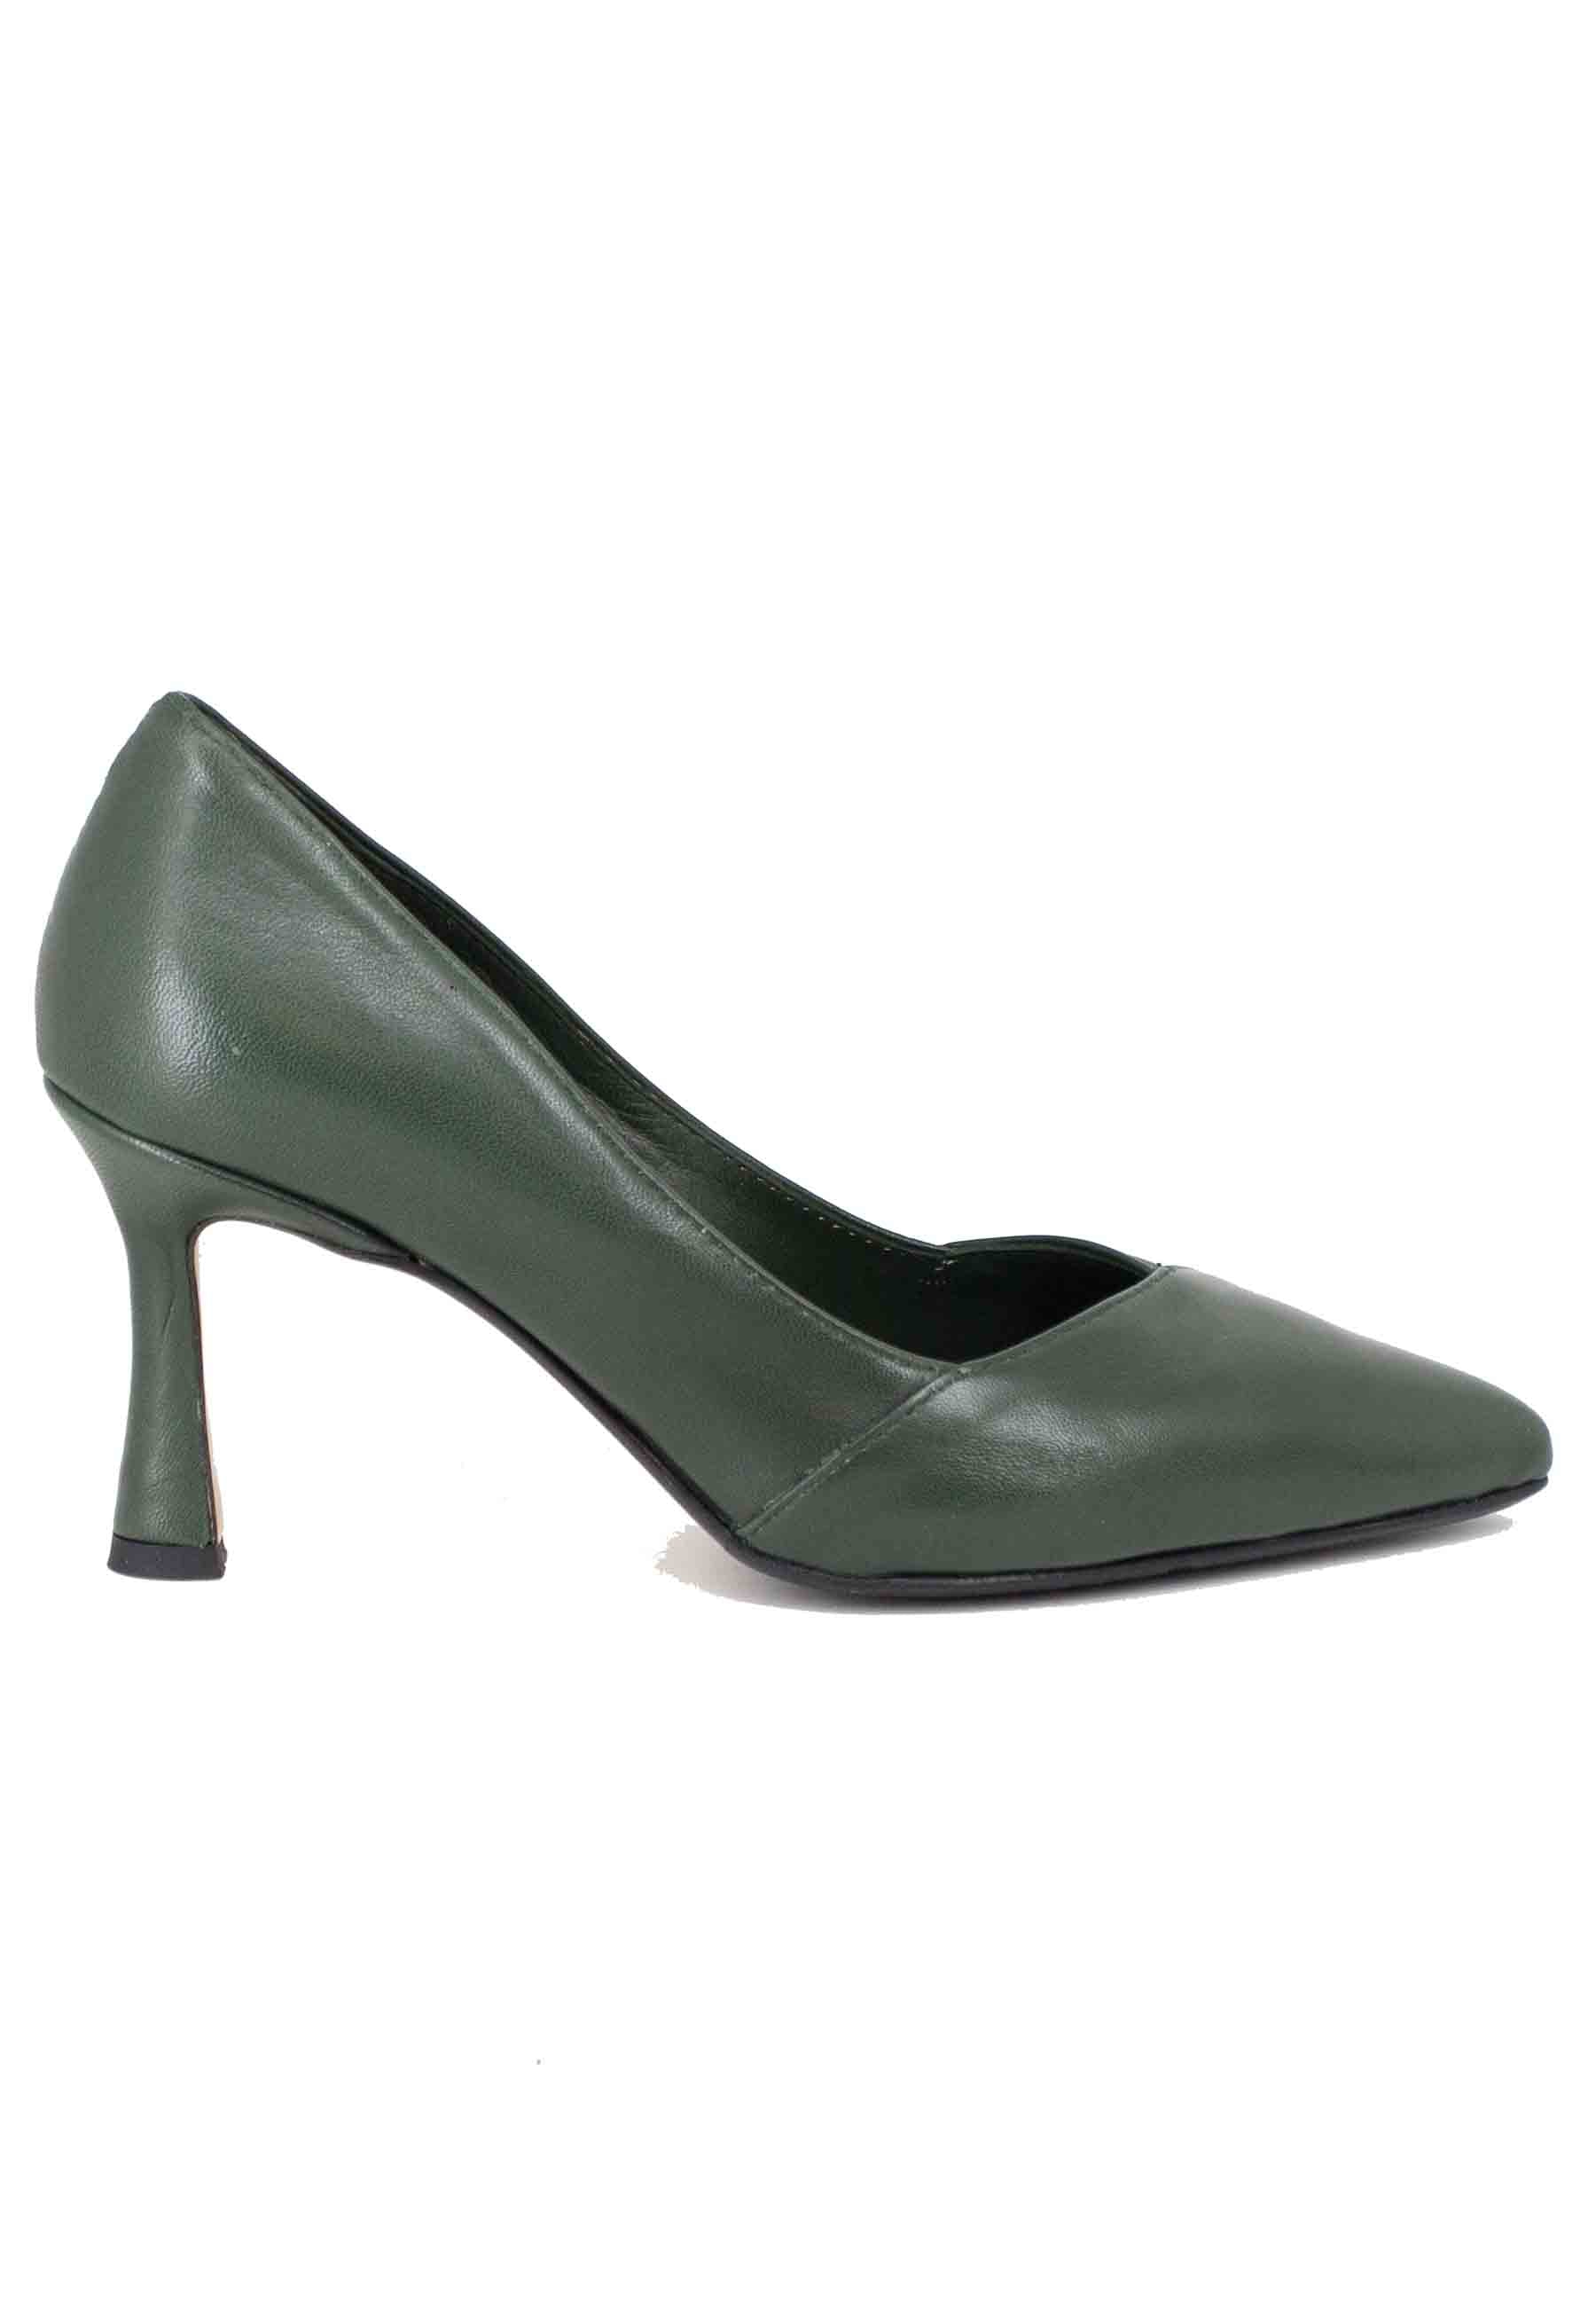 Women's high heel green leather pumps